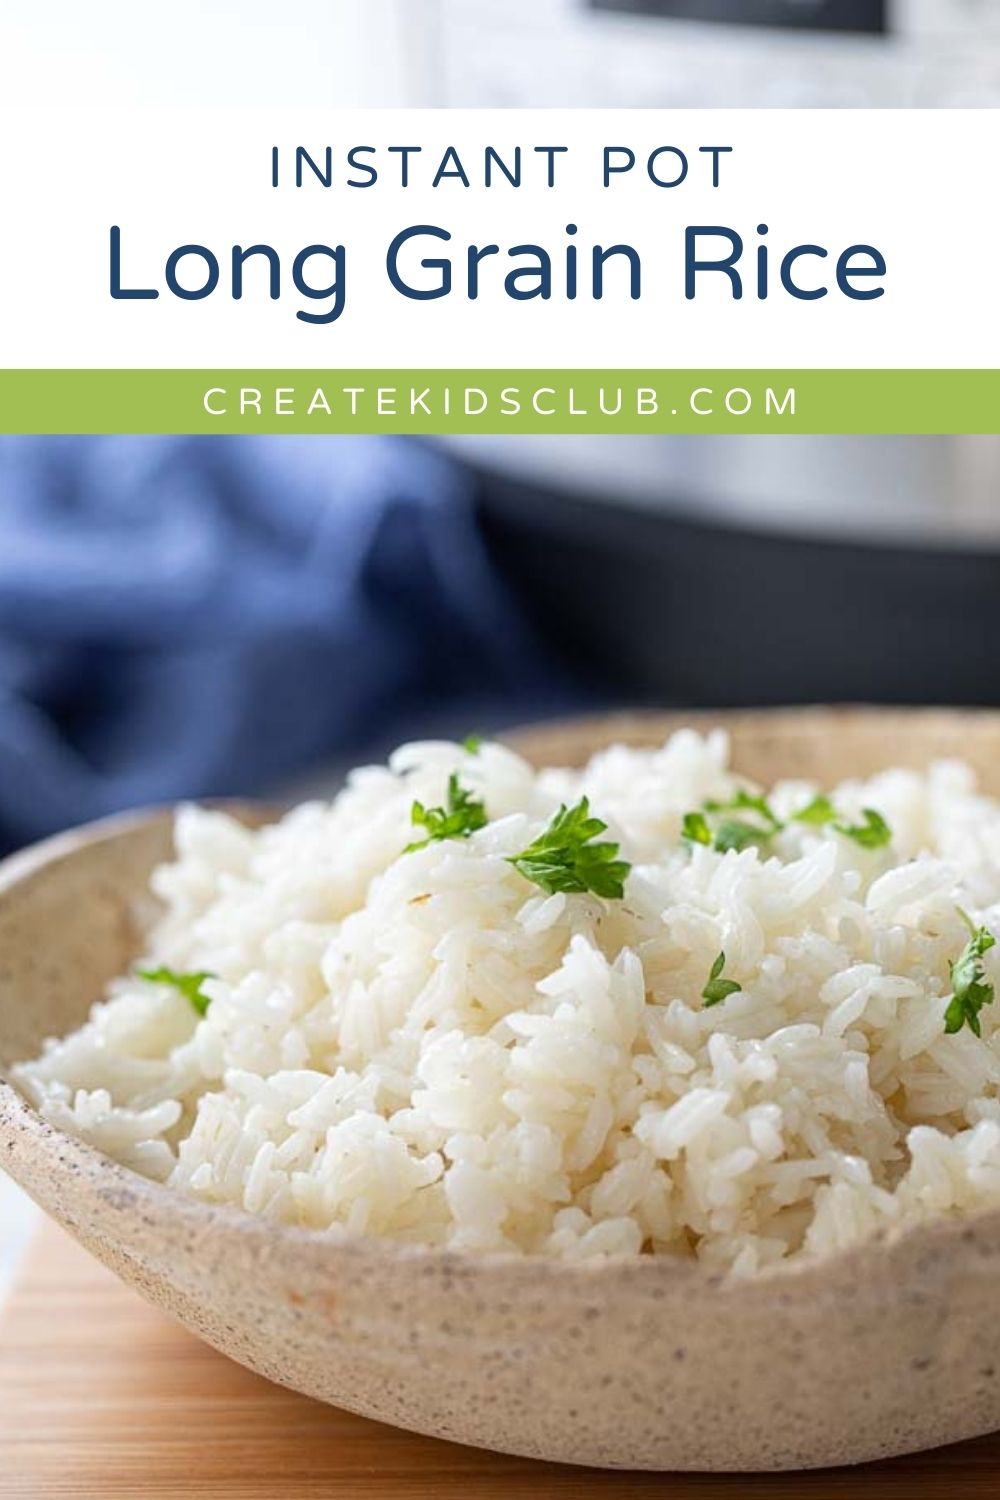 Pin of instant pot long grain rice